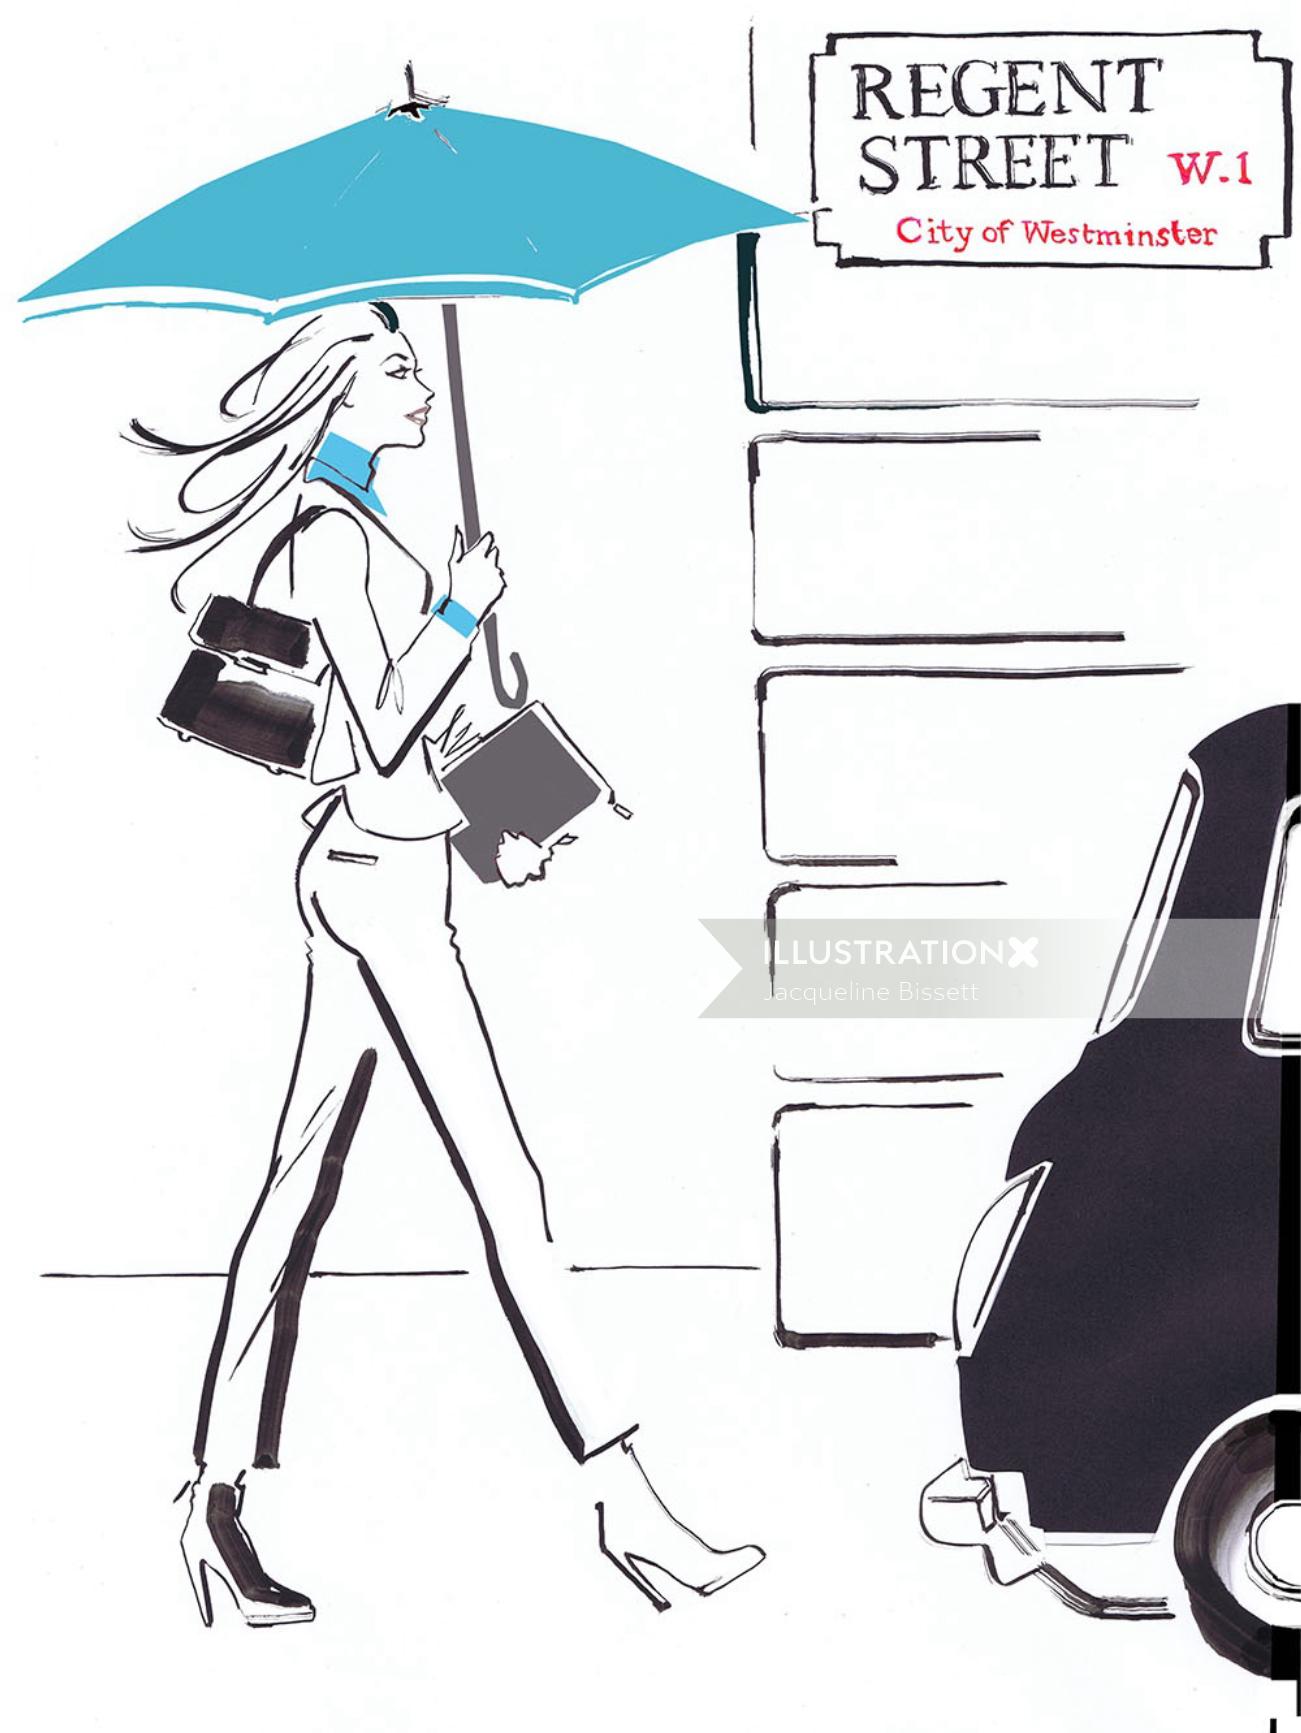 Illustration of lady with umbrella